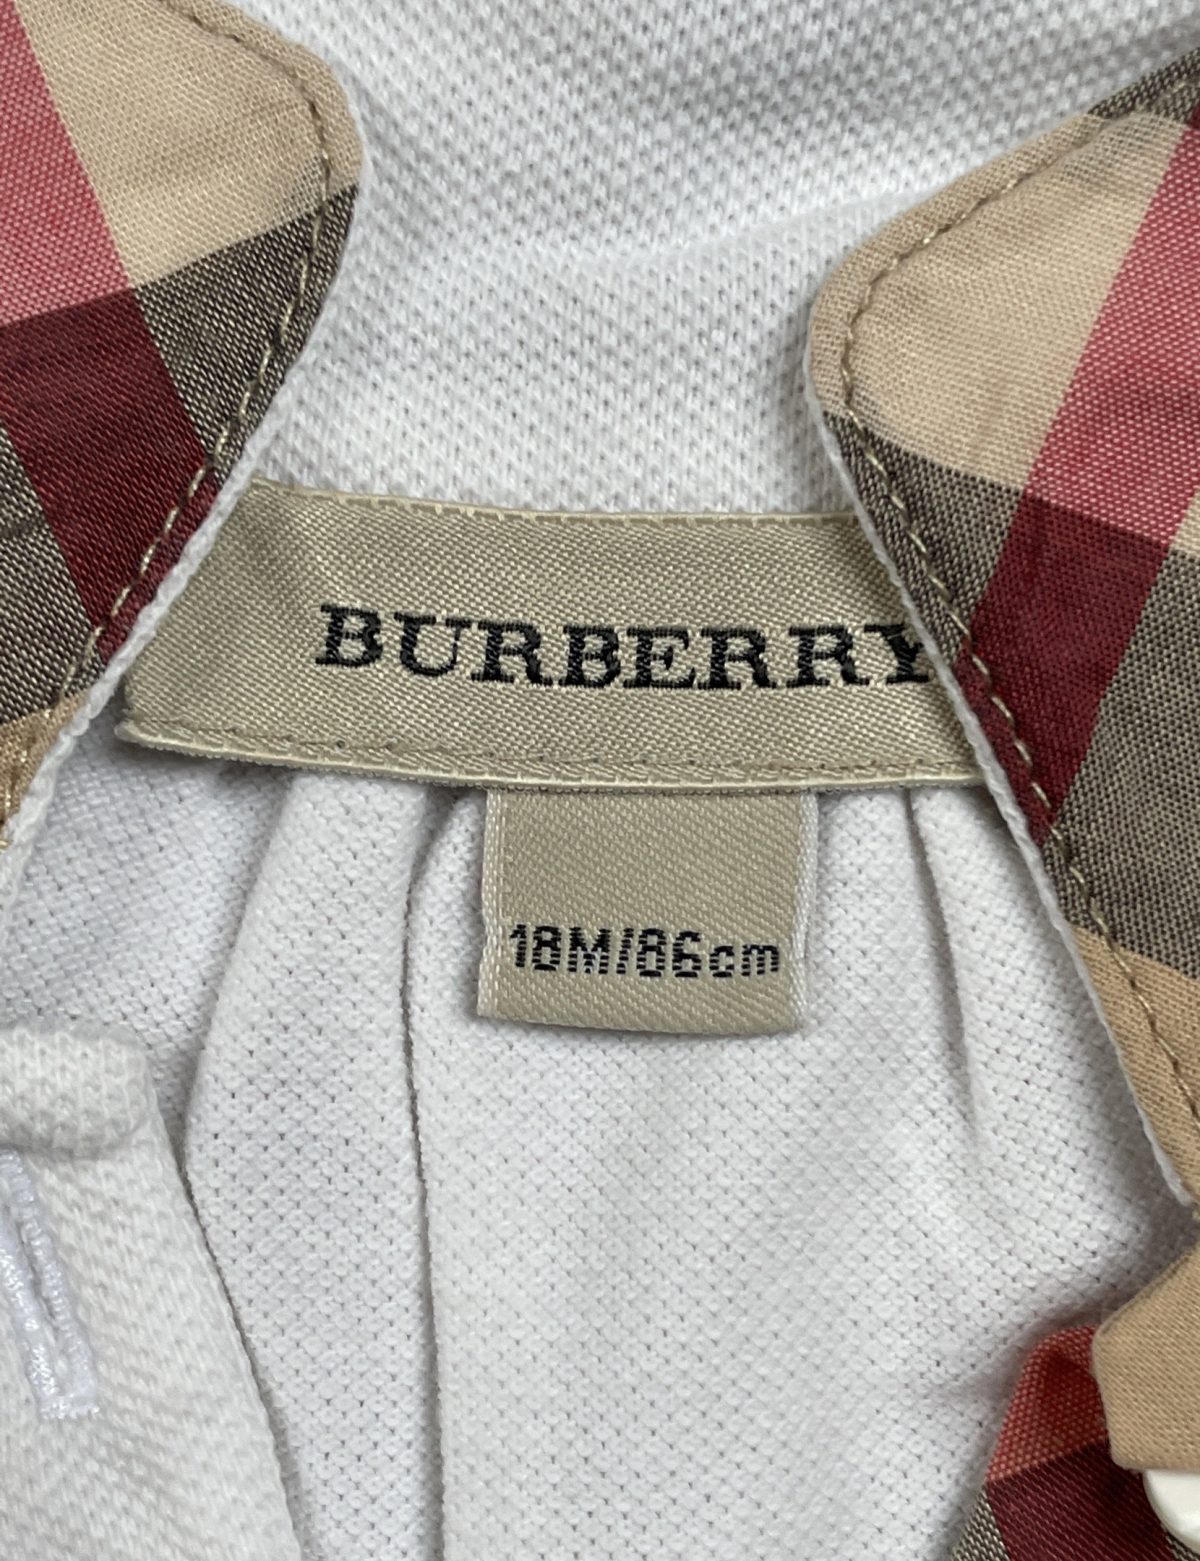 burberry-kislany-feher-ruha-4